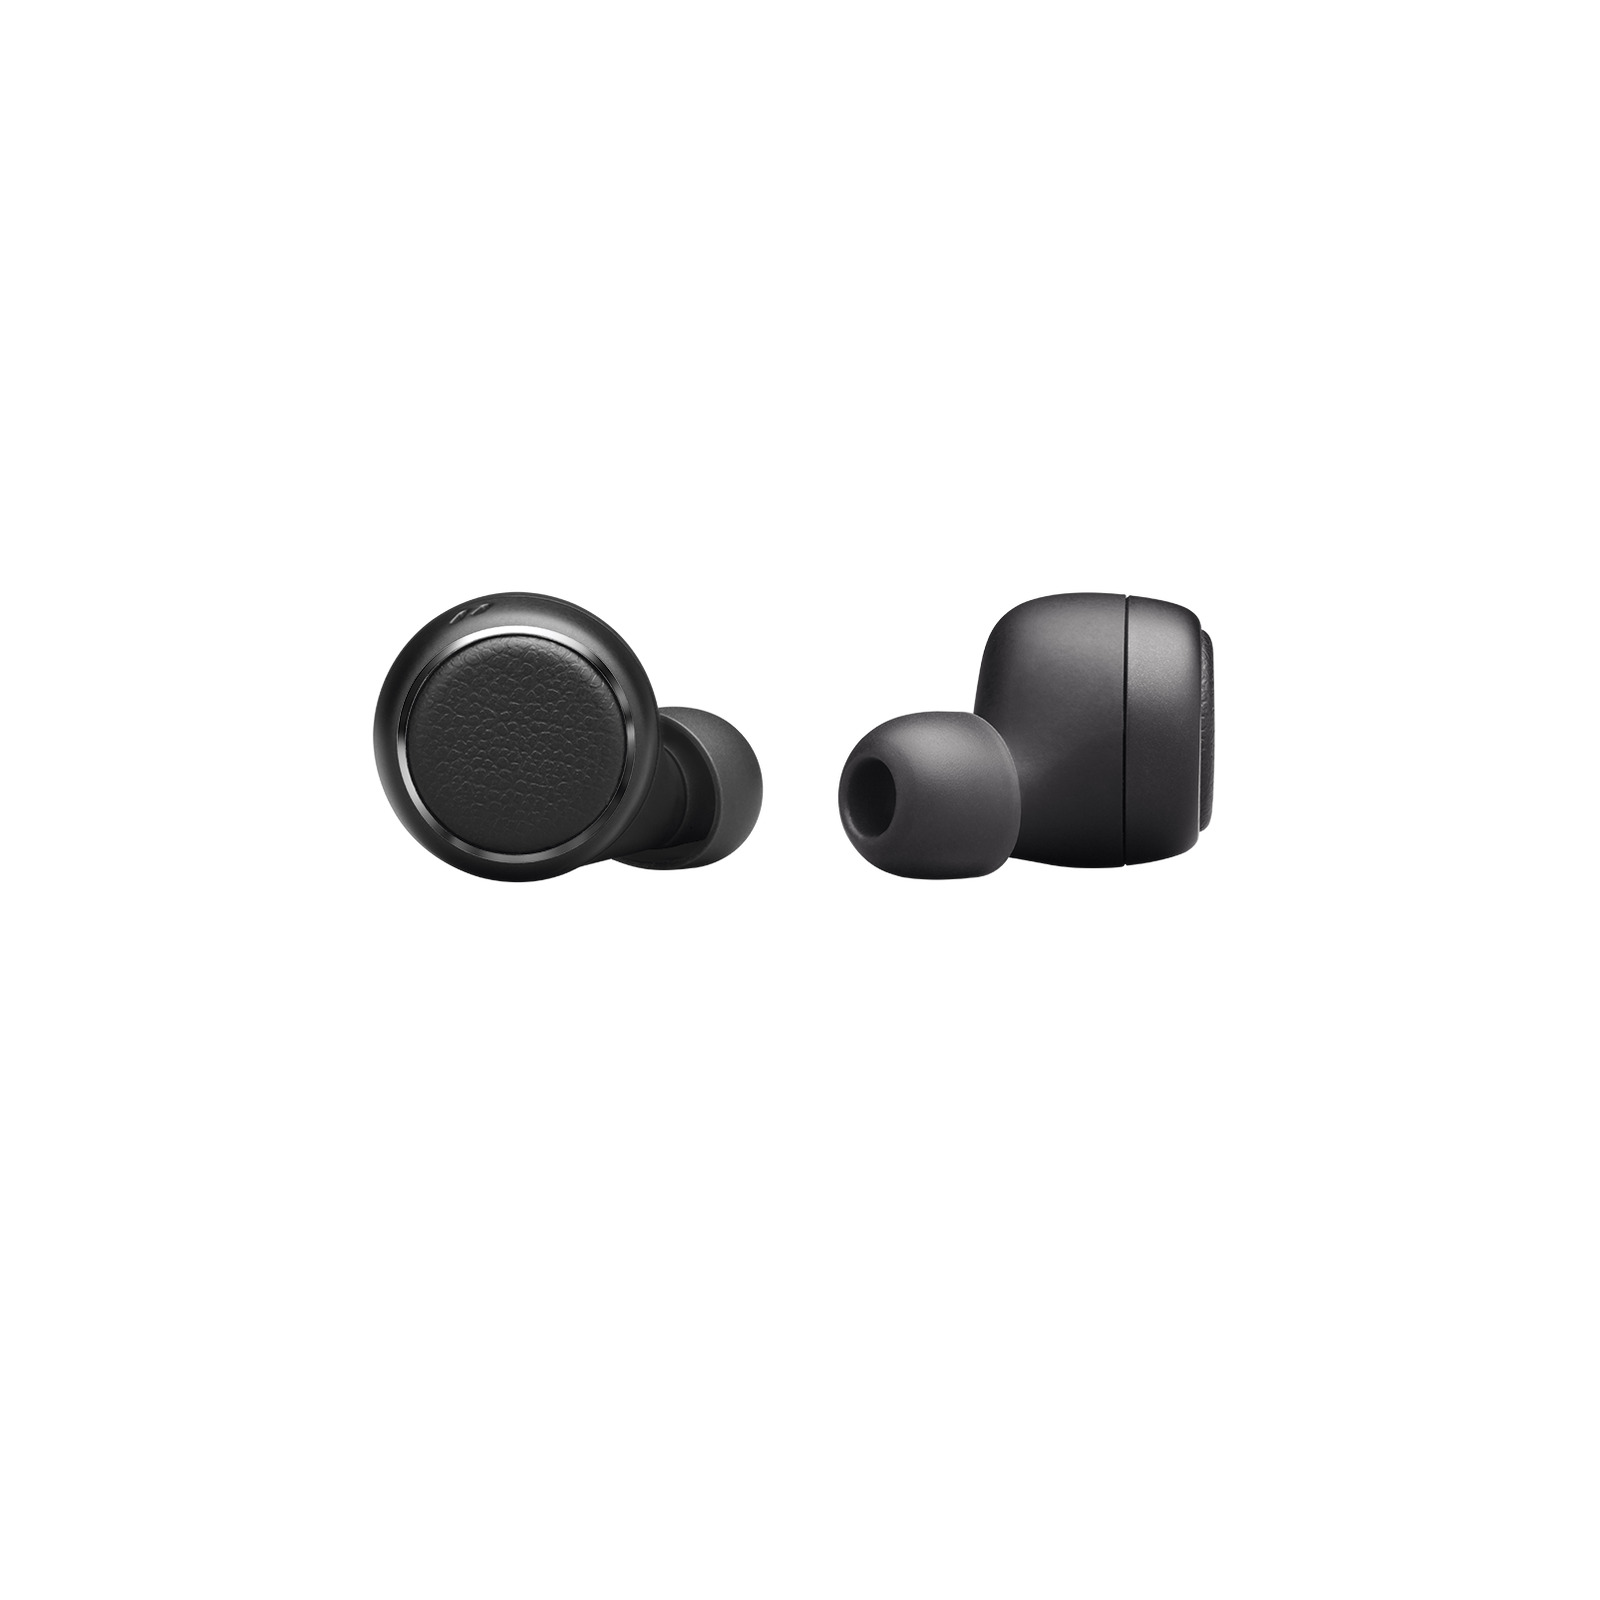 Harman Kardon FLY TWS Bluetooth Headphones (Black)